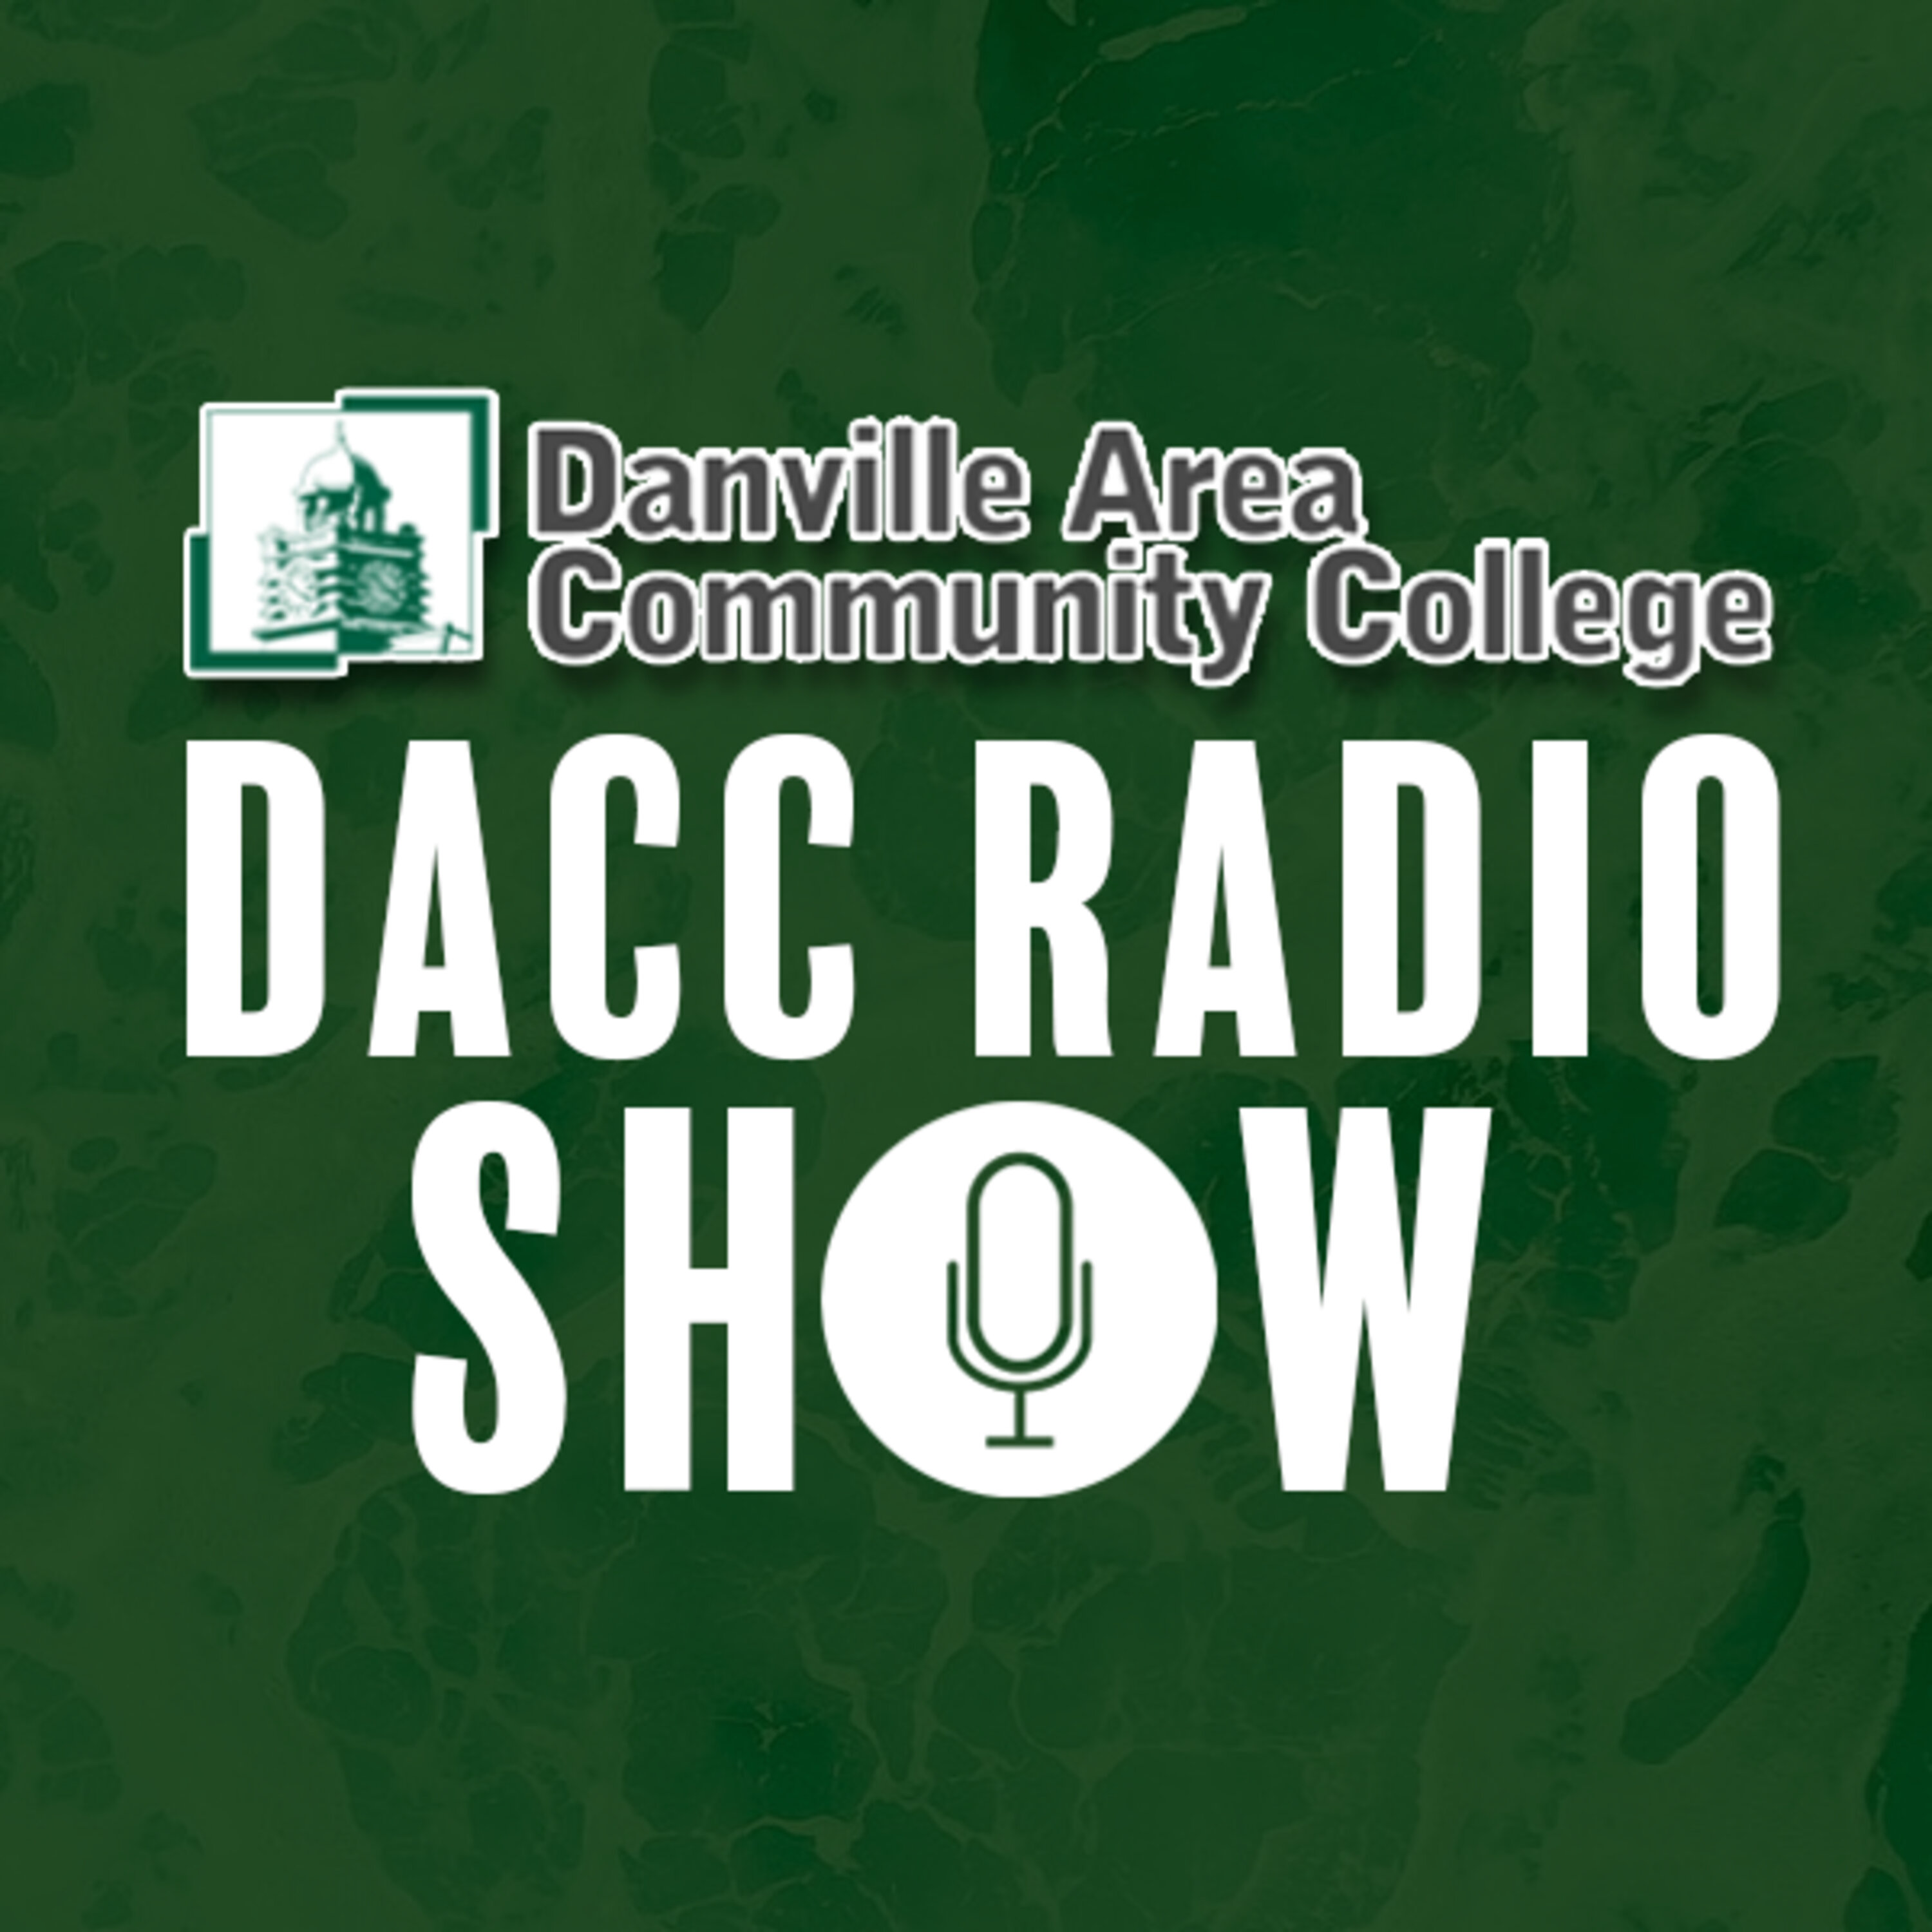 DACC Radio Show June 08 - Video Development